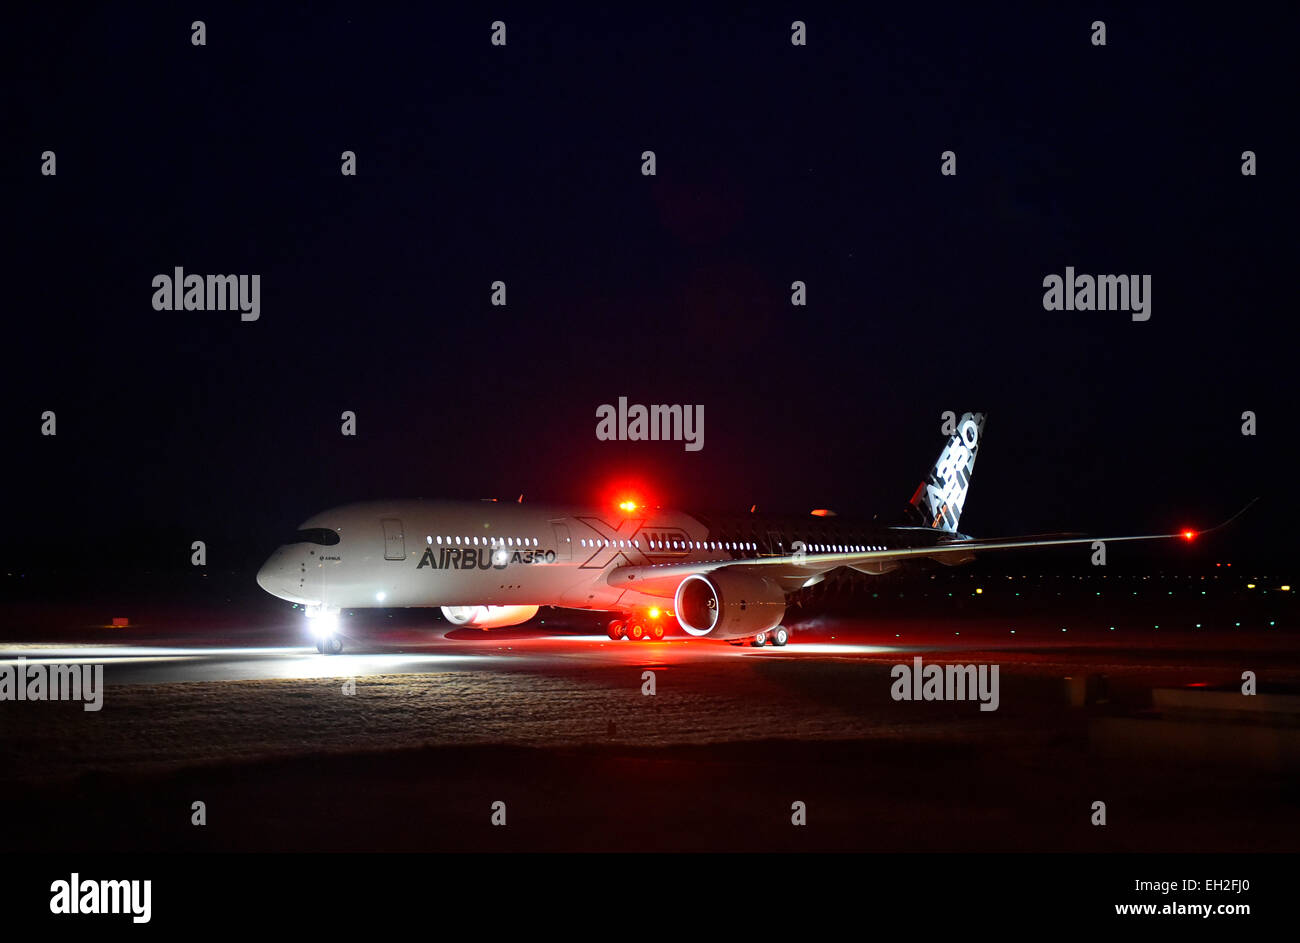 aircraft anti collision lights